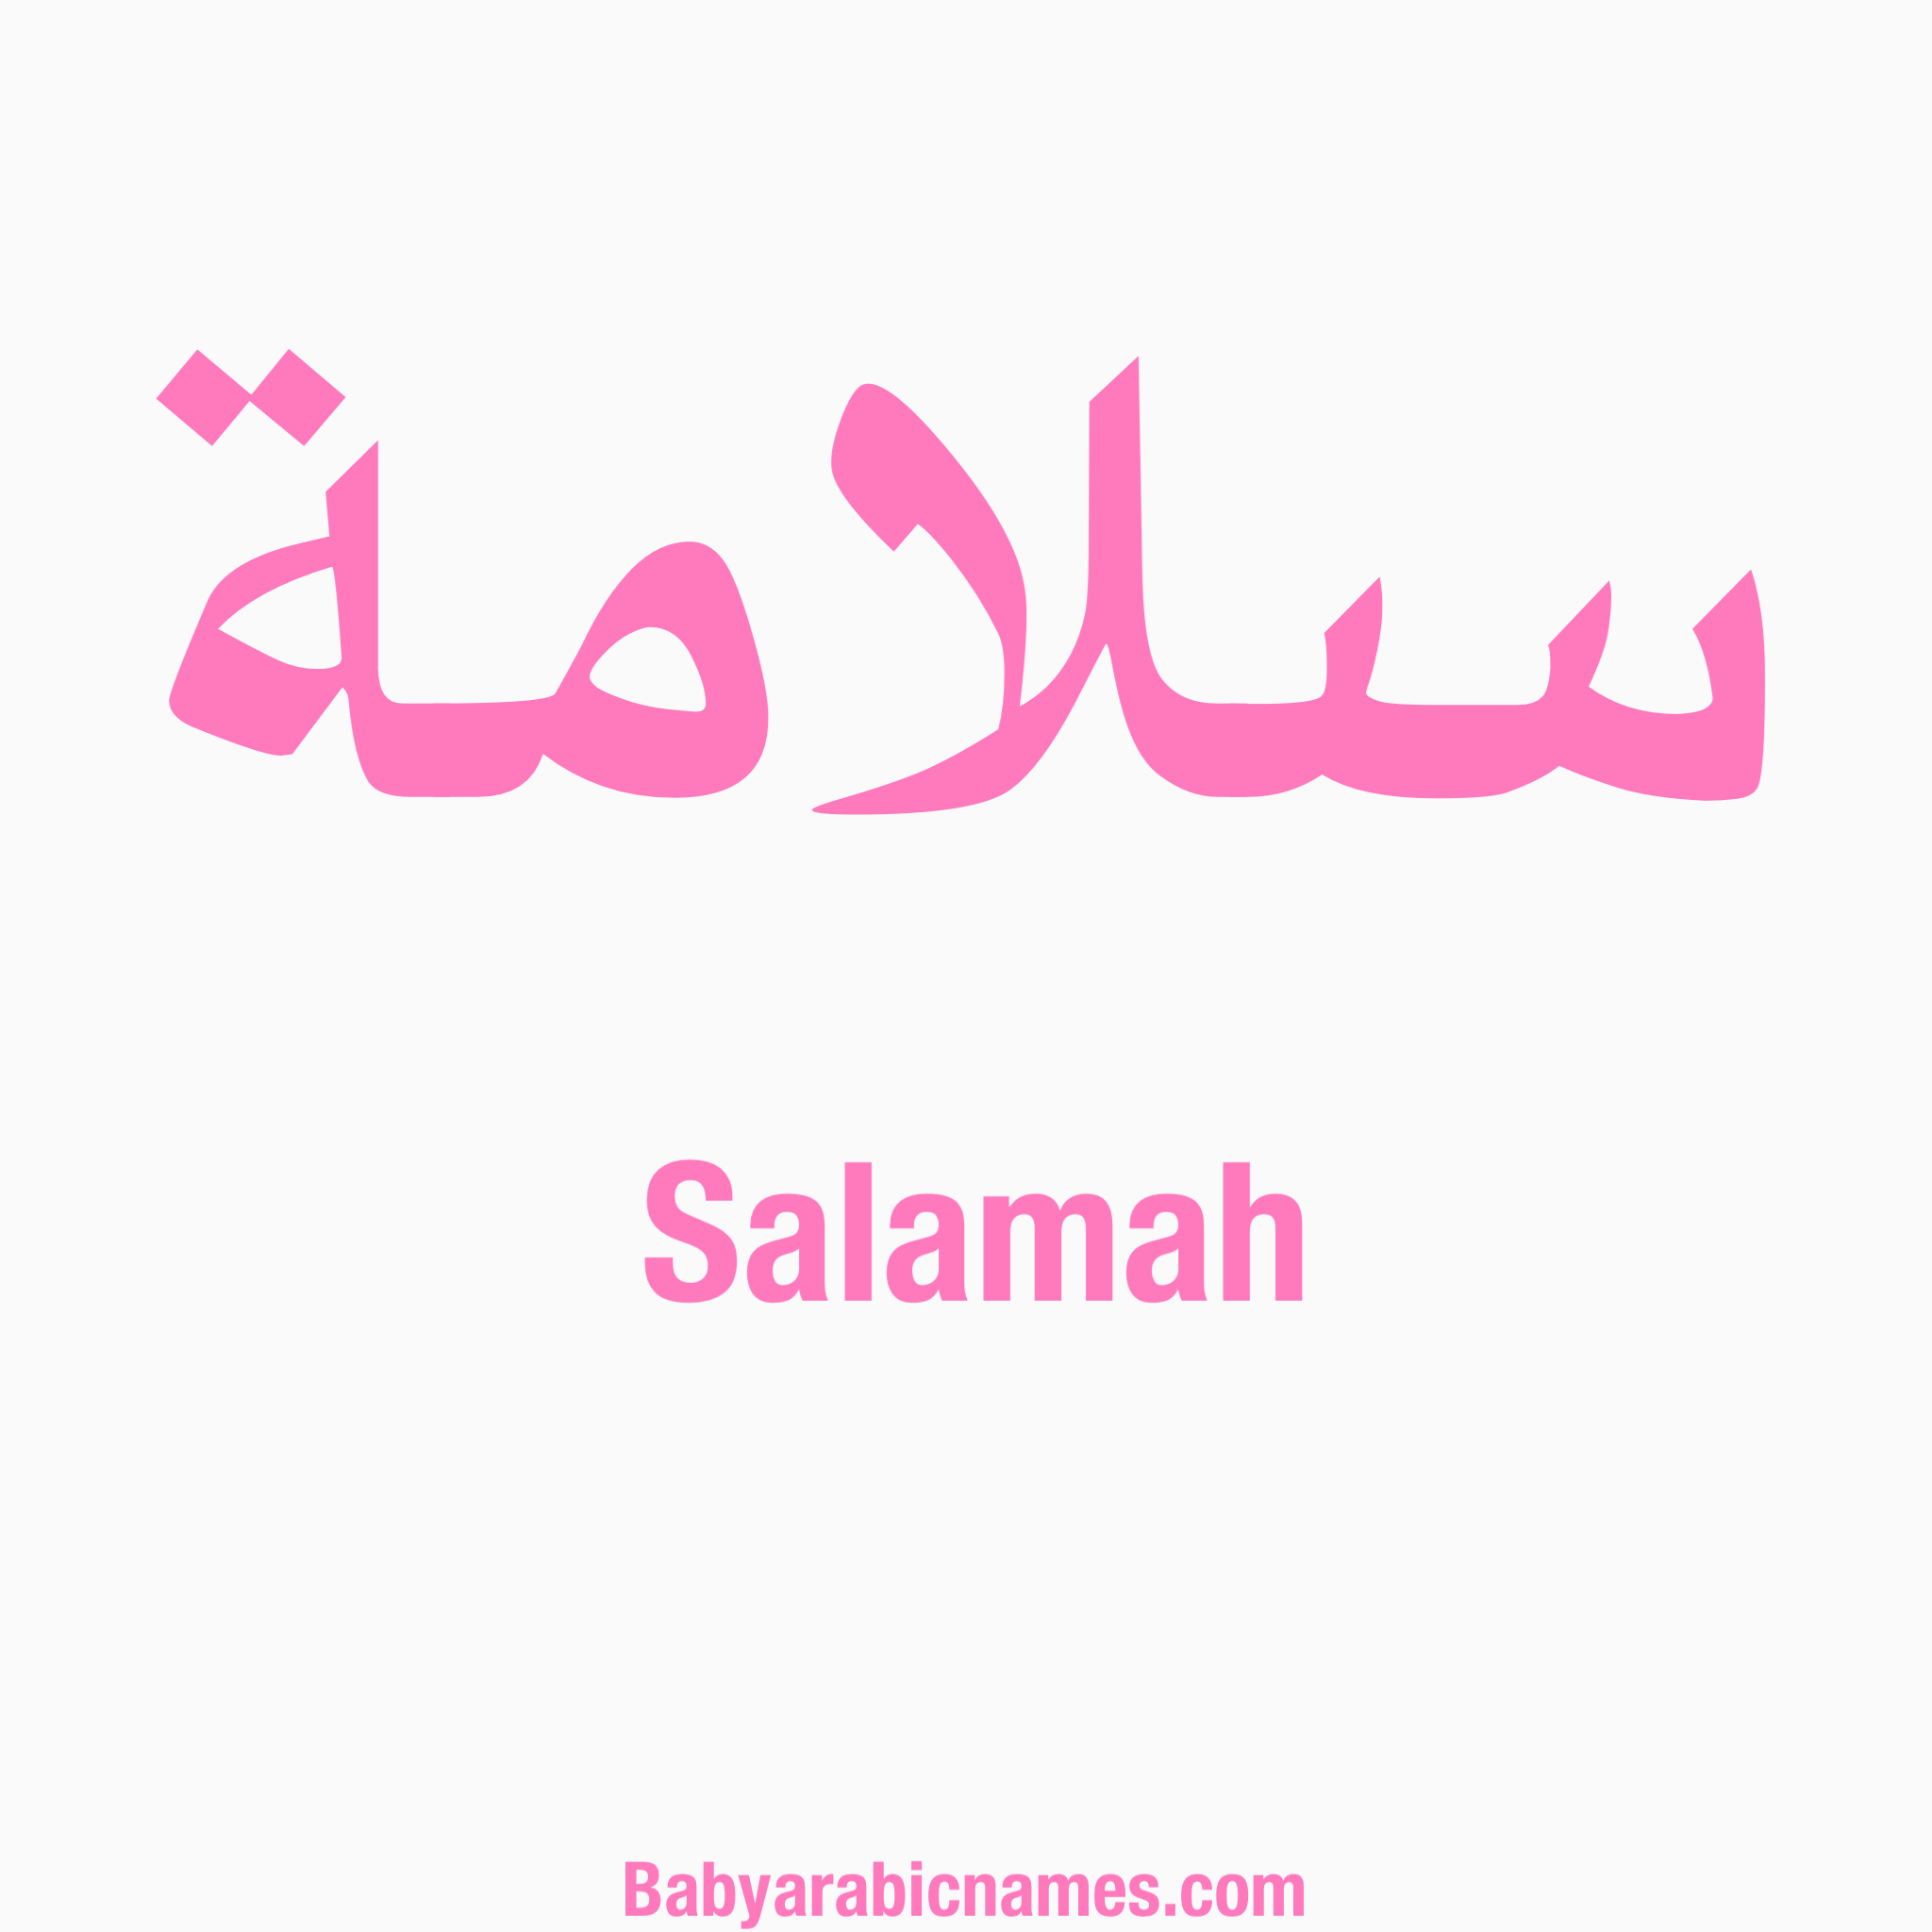 Salamah Baby Girl Arabic Name